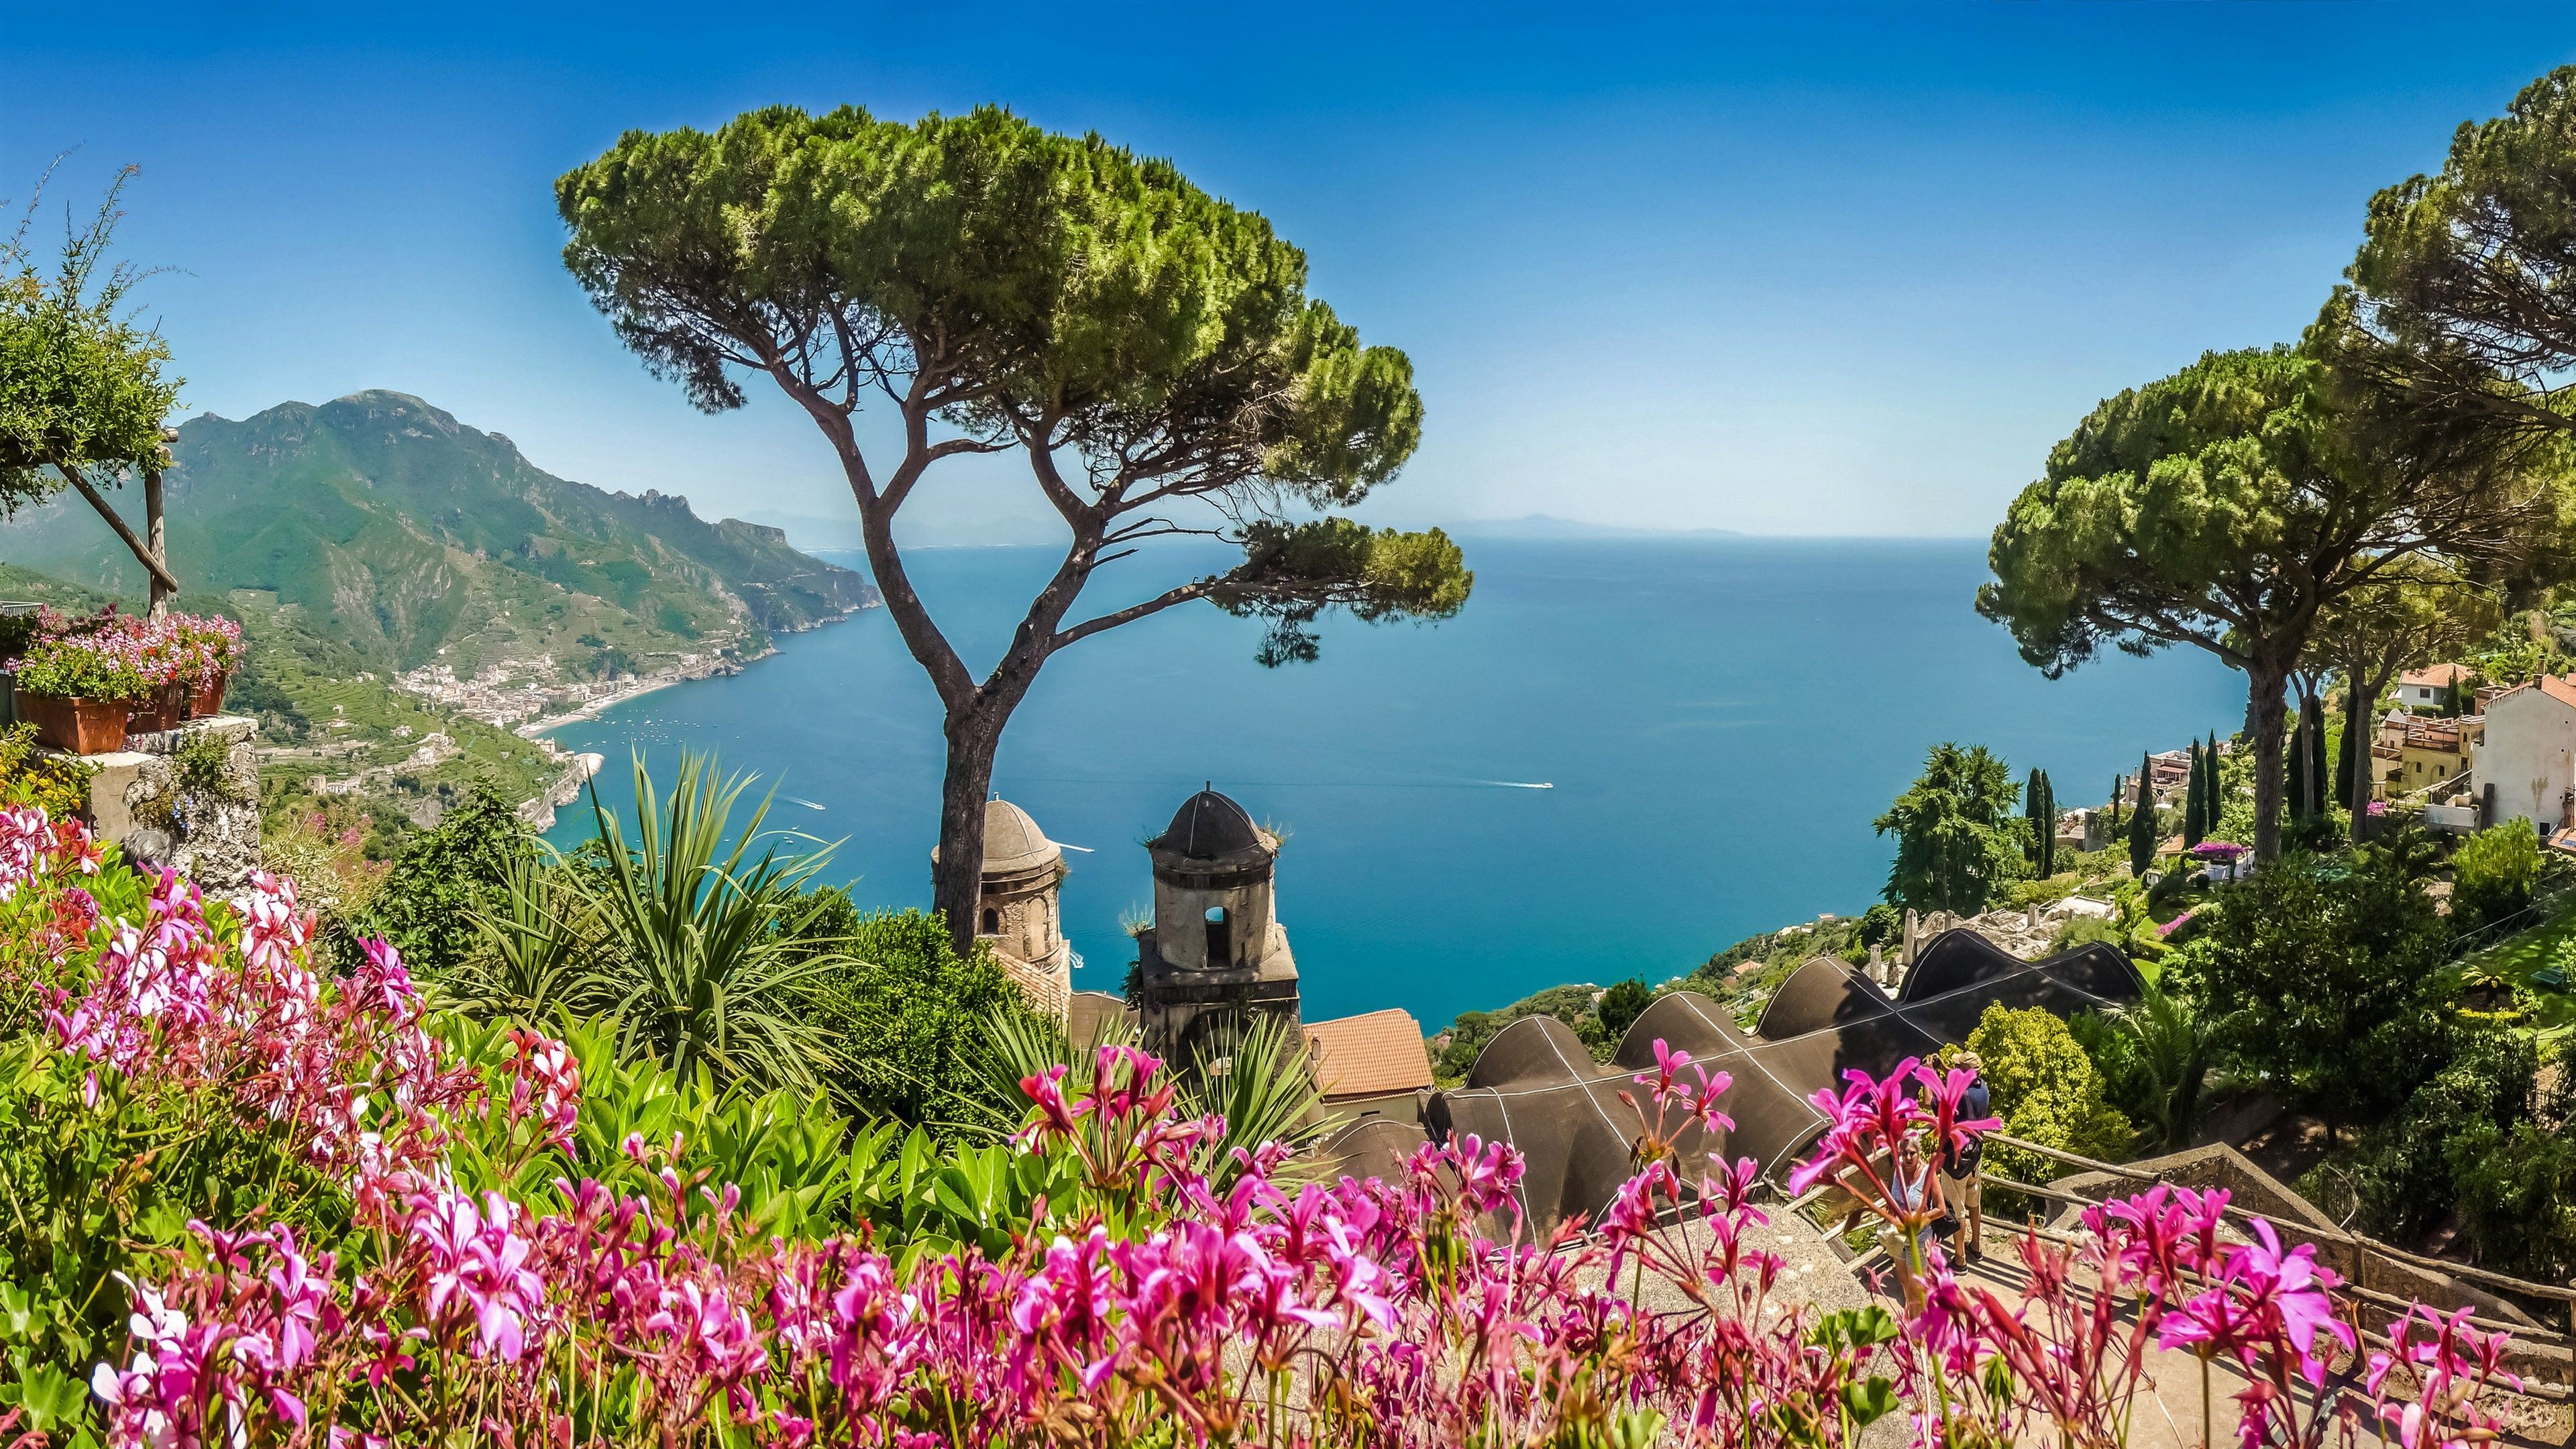 Amalfi Coast in Italy 4k Ultra HD Wallpaper. Background Image